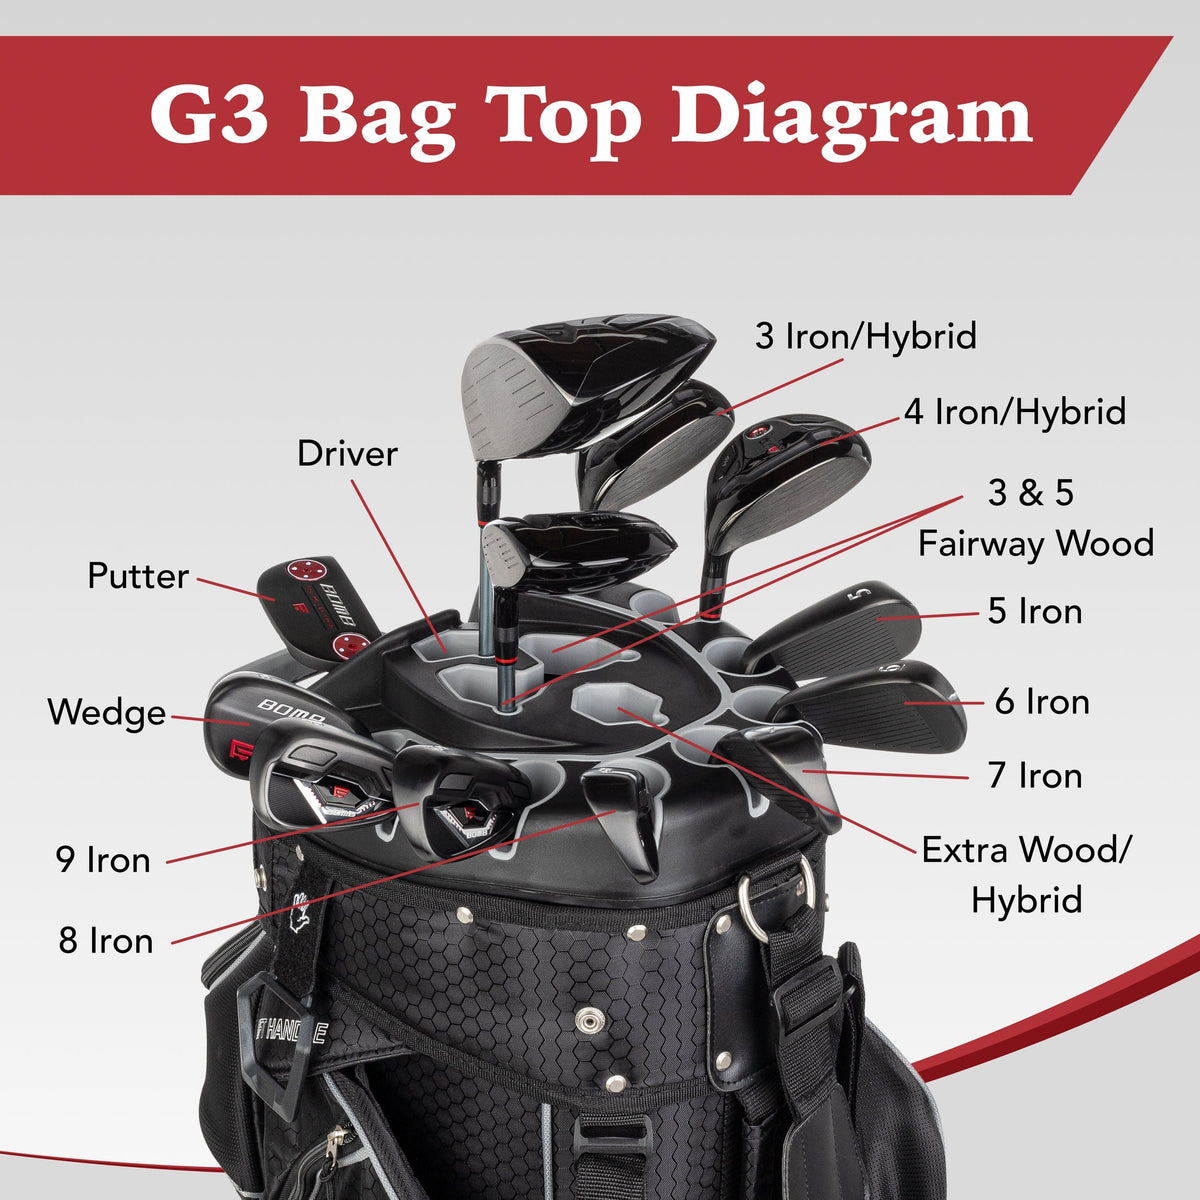 Founders Club 3rd Generation Premium Organizer 14 Way Golf Cart Bag - Charcoal